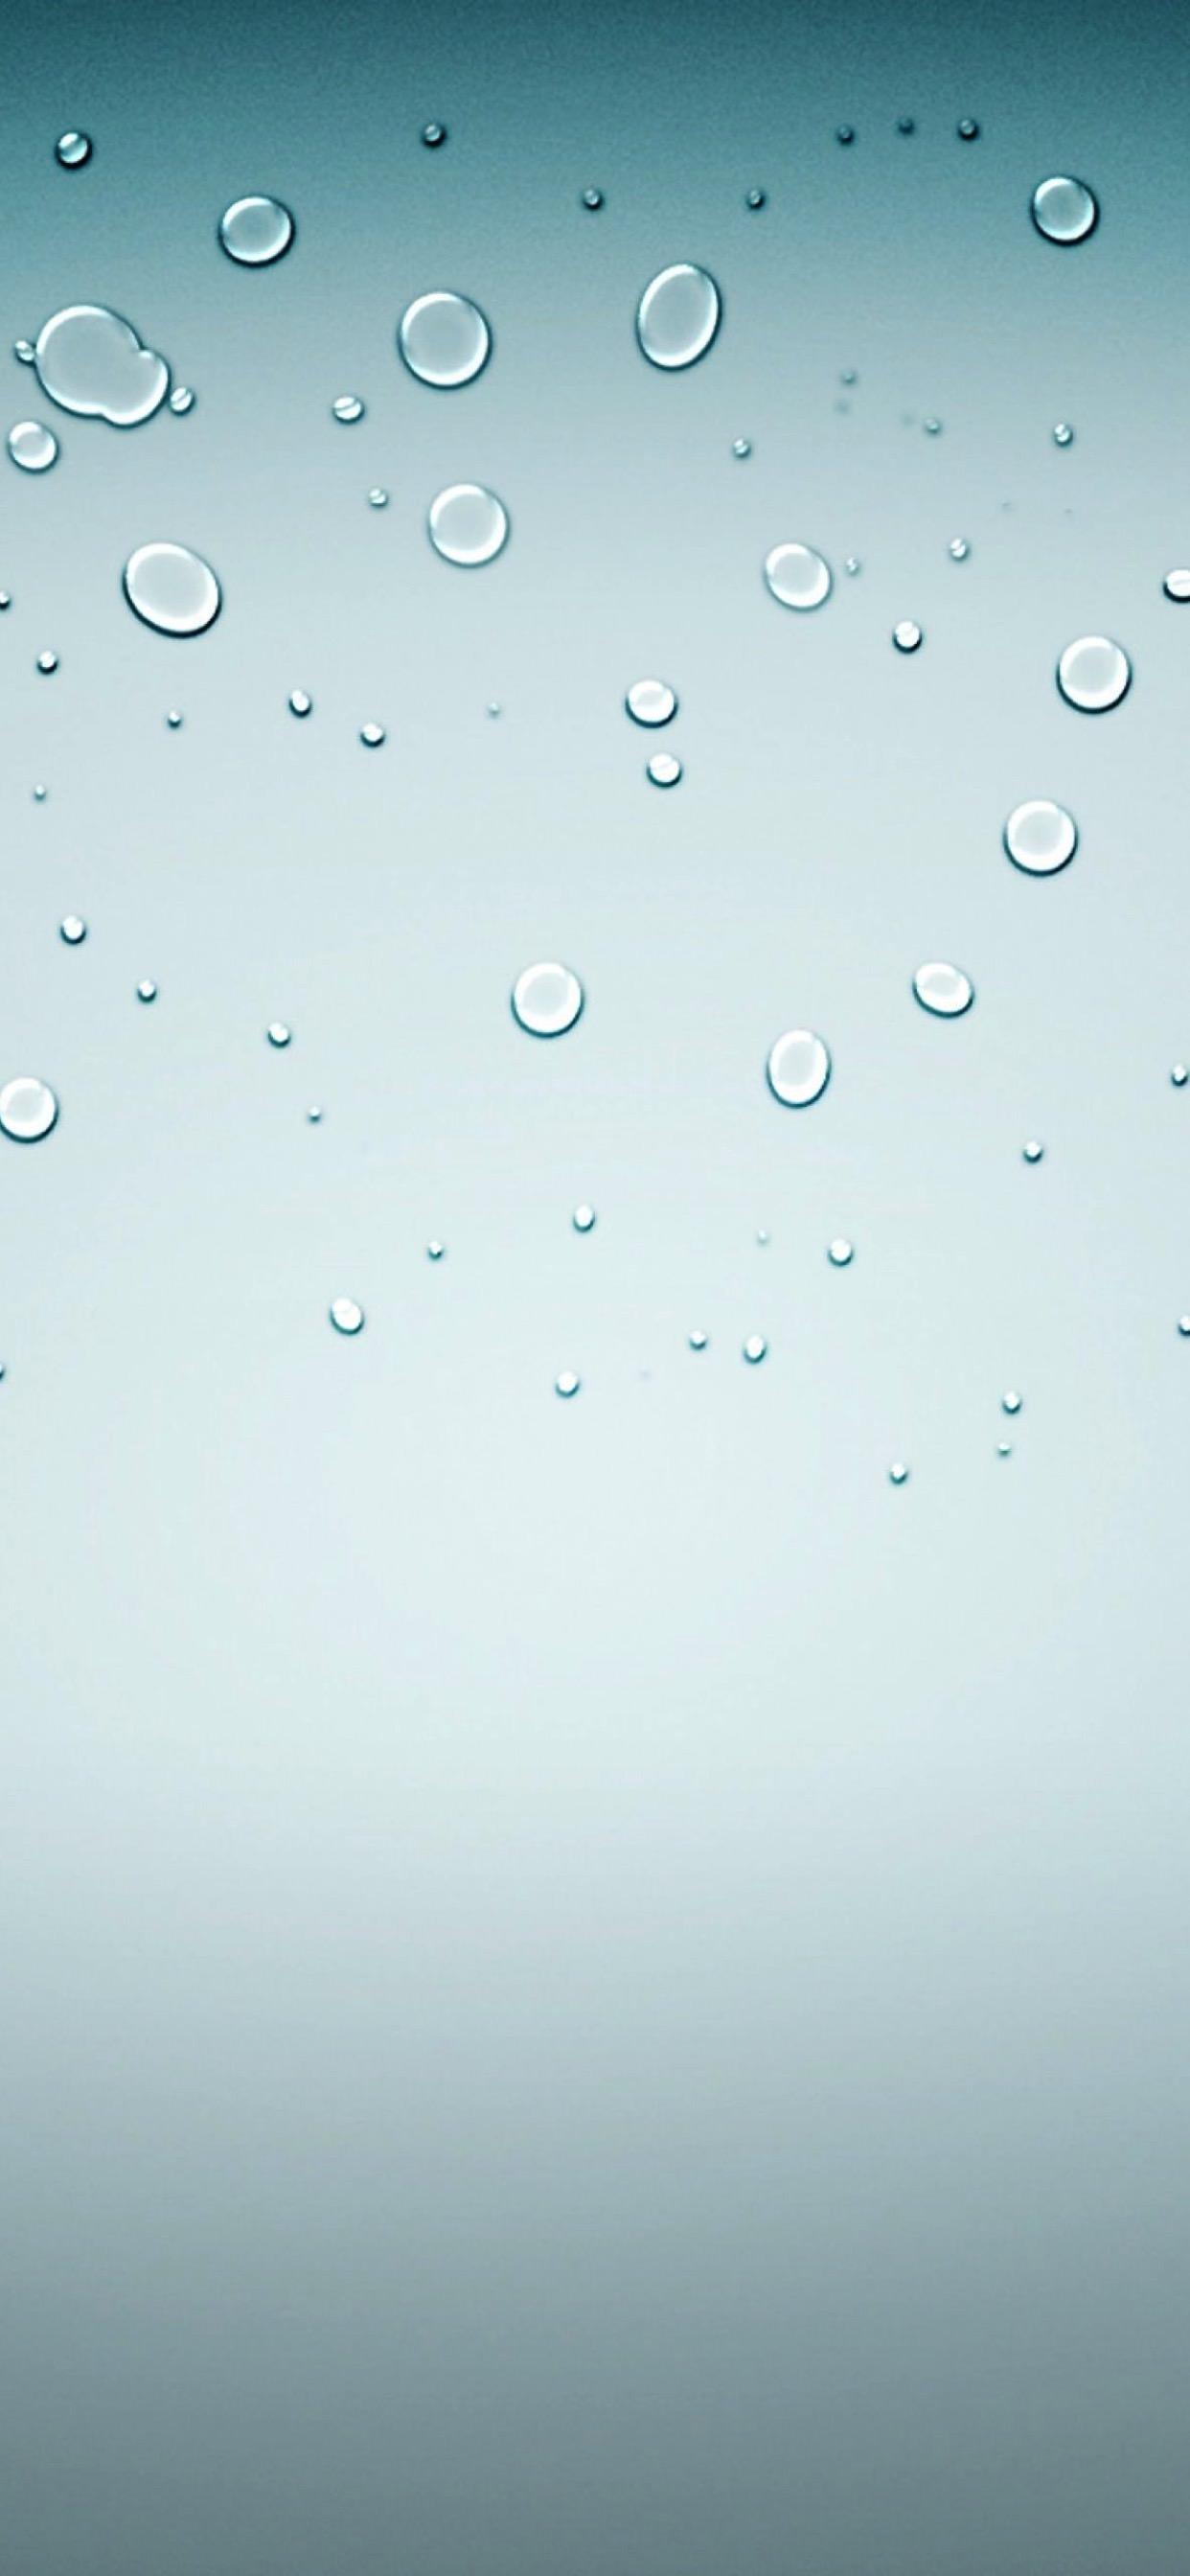 Natural water drops. wallpaper.sc iPhone XS Max